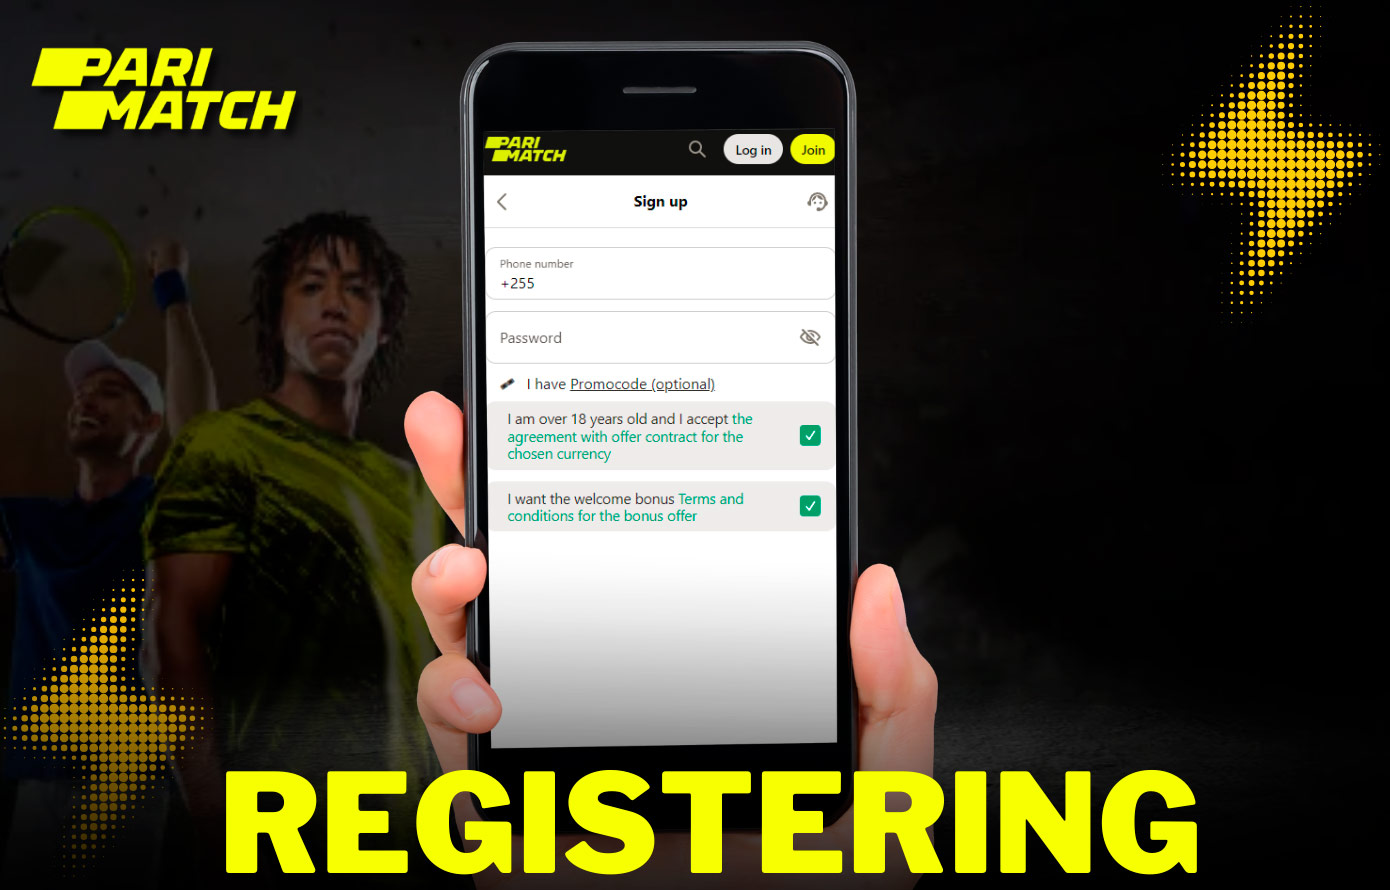 Registration through the Parimatch mobile application